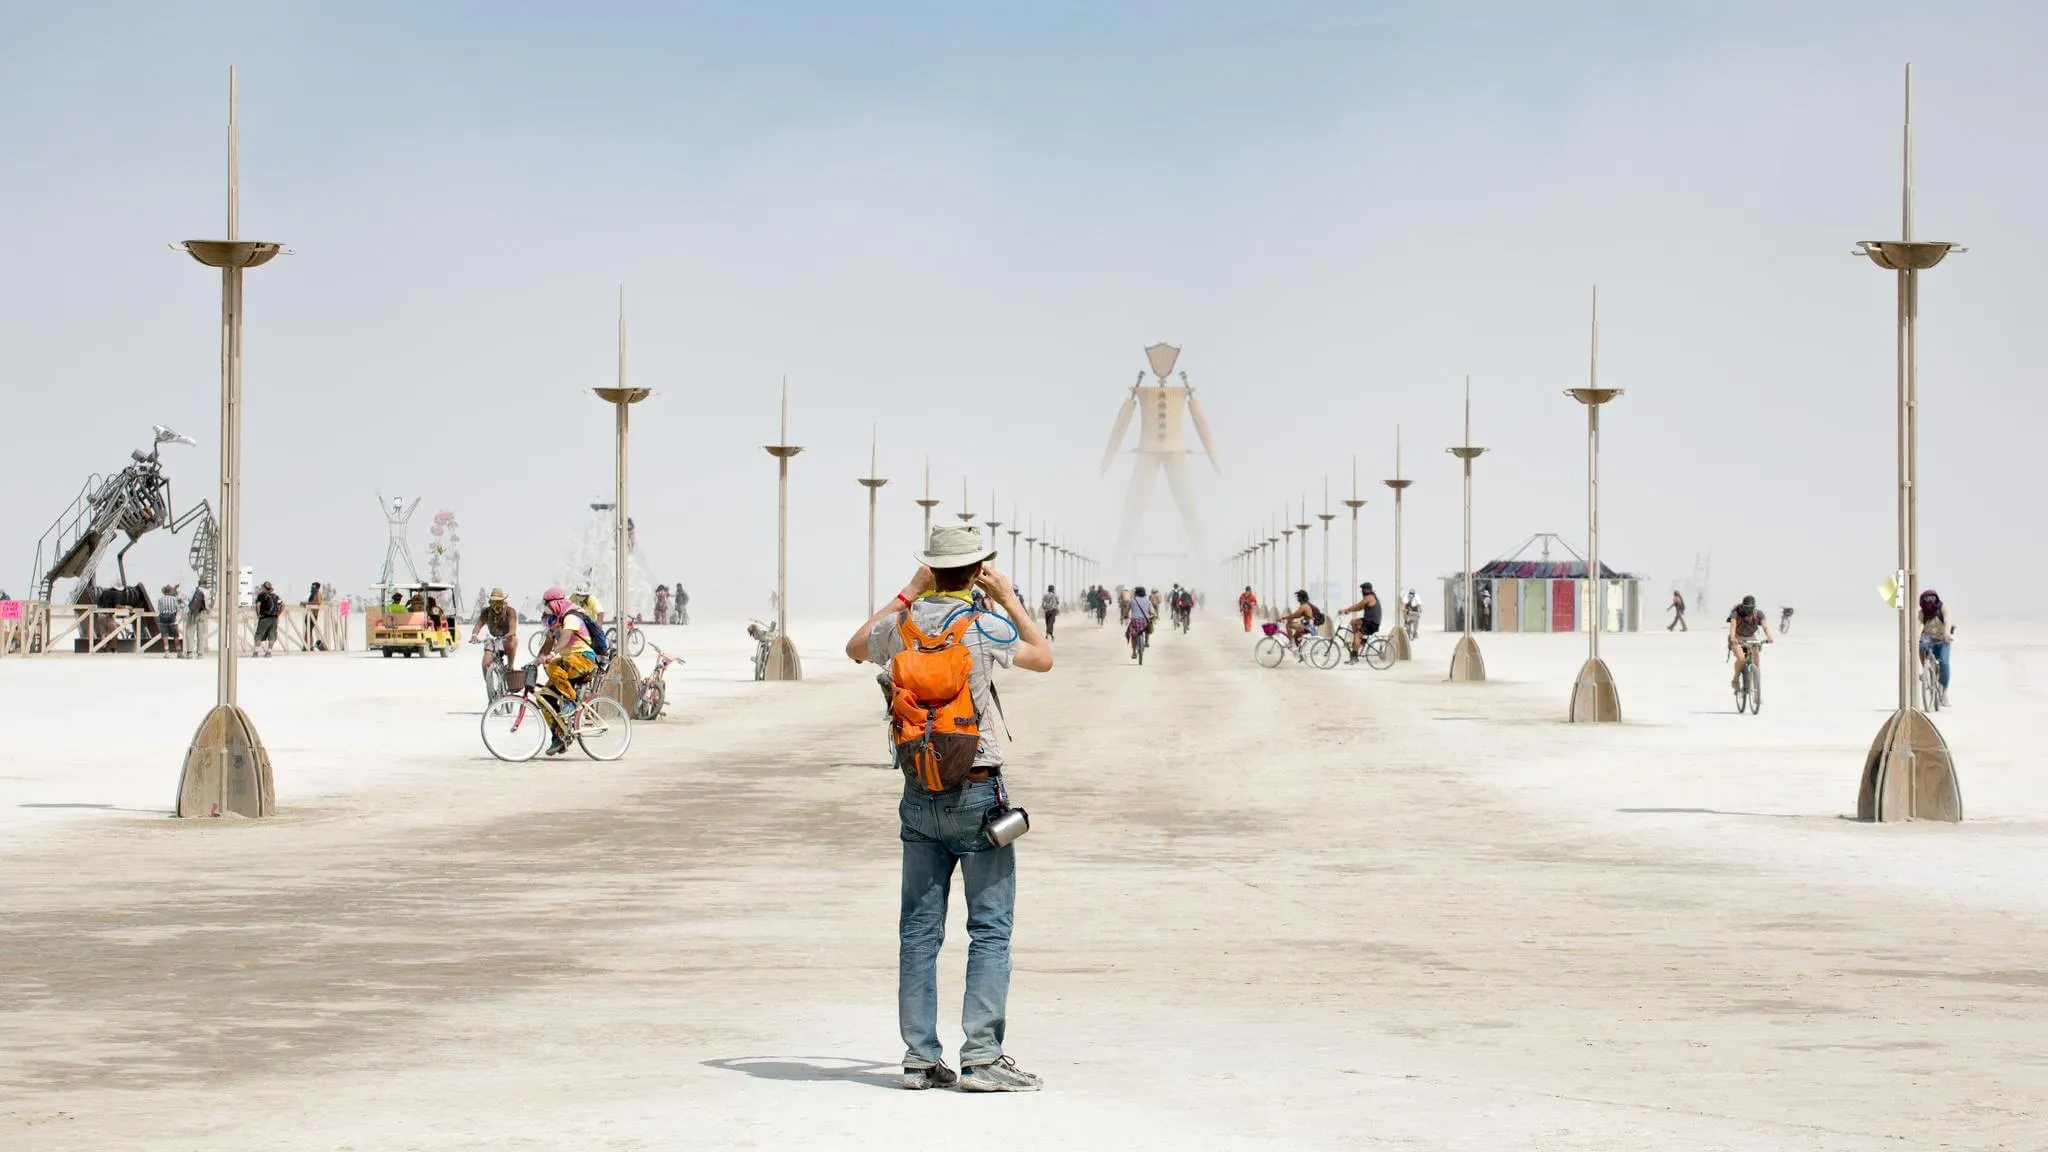 Blogs about Burning Man